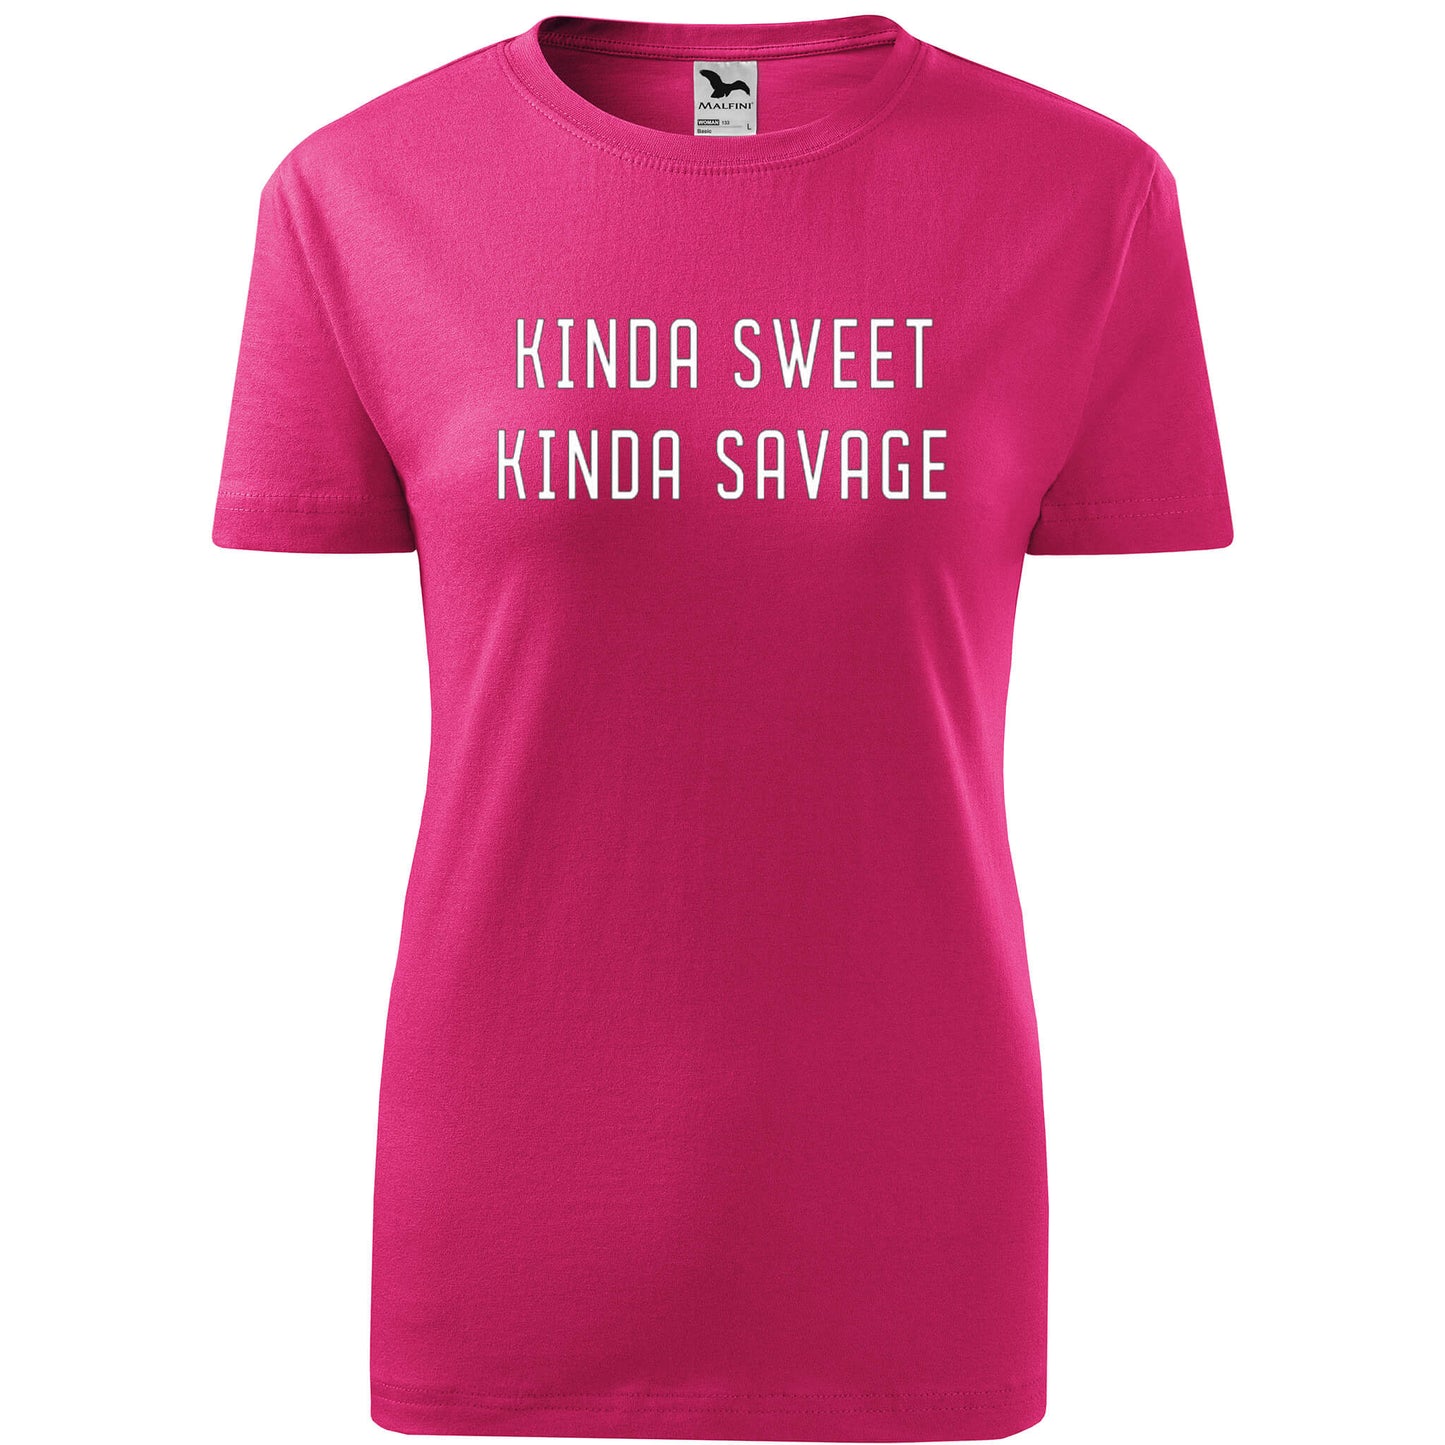 T-shirt - Kinda sweet kinda savage - rvdesignprint